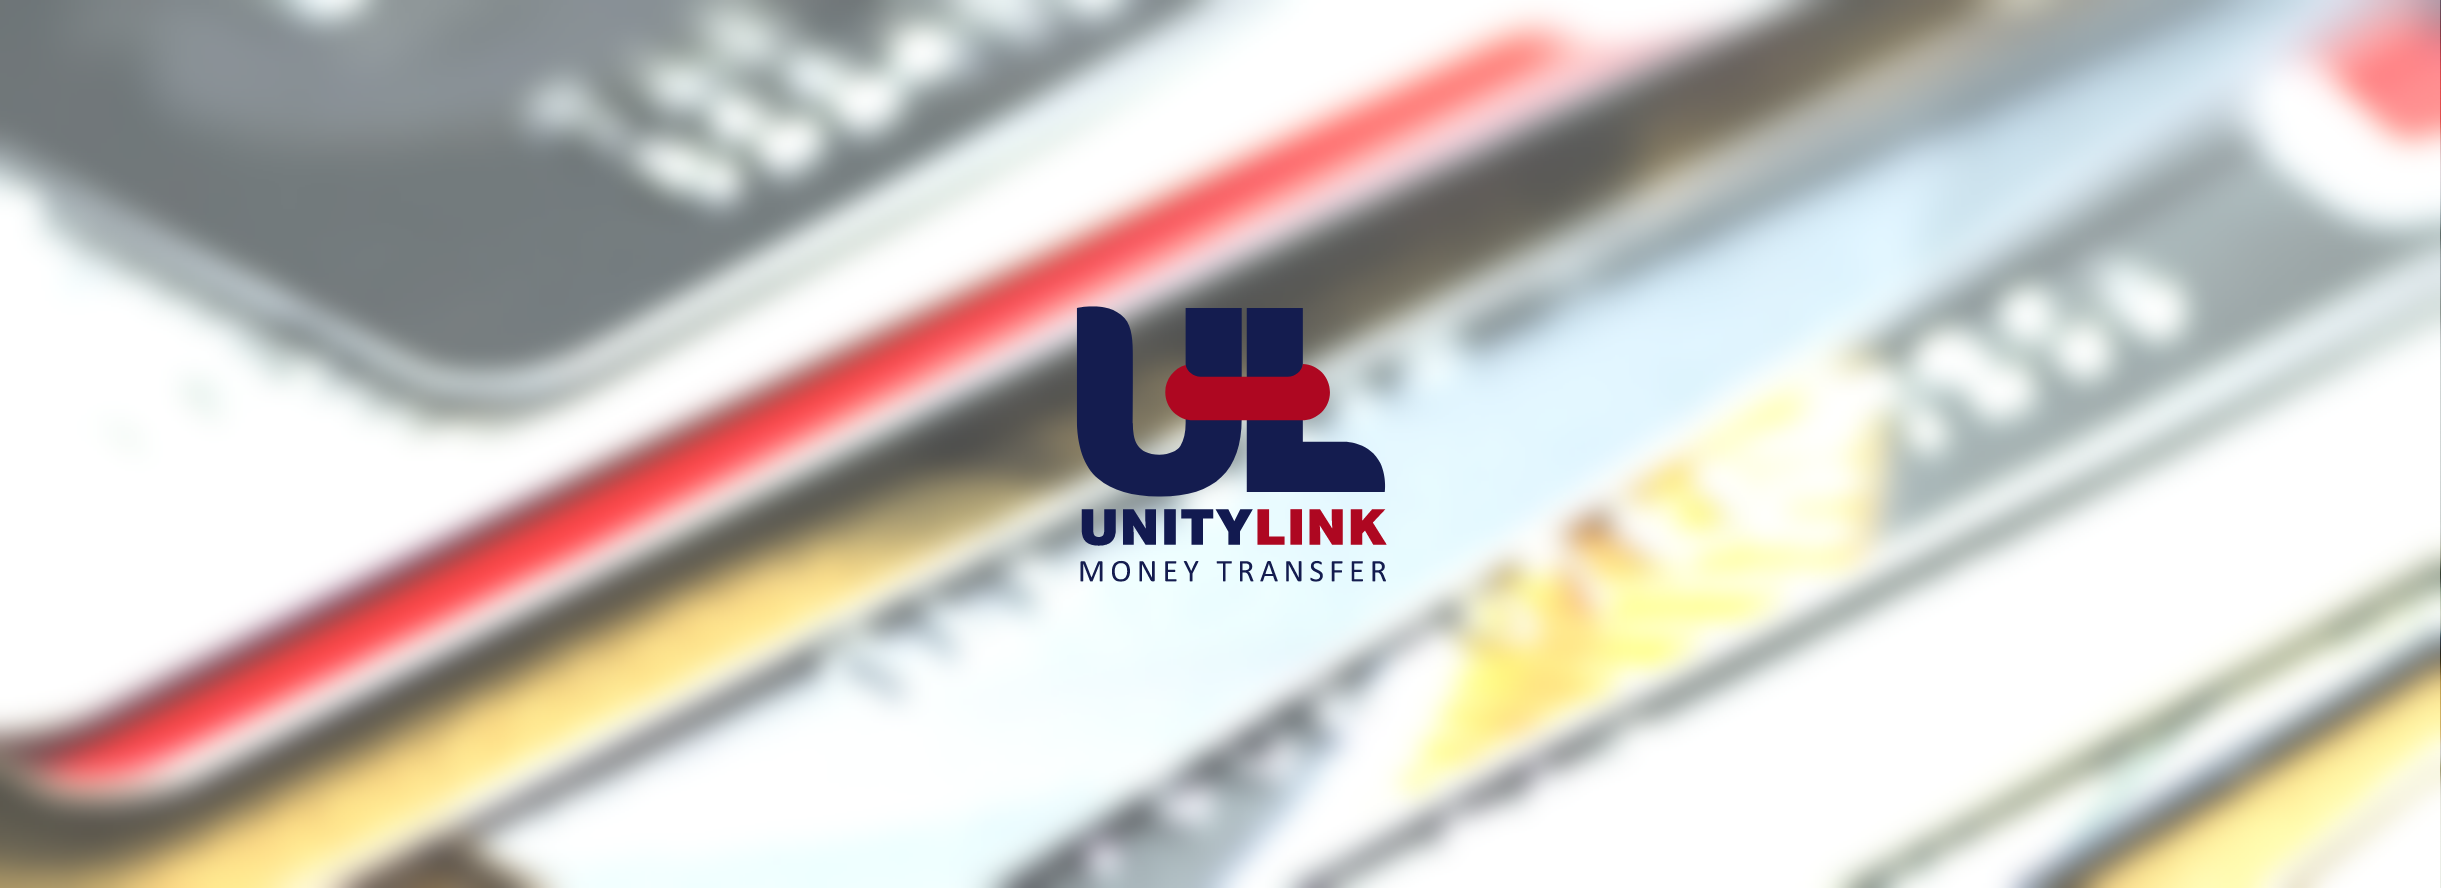 UnityLink - Web Design & Branding